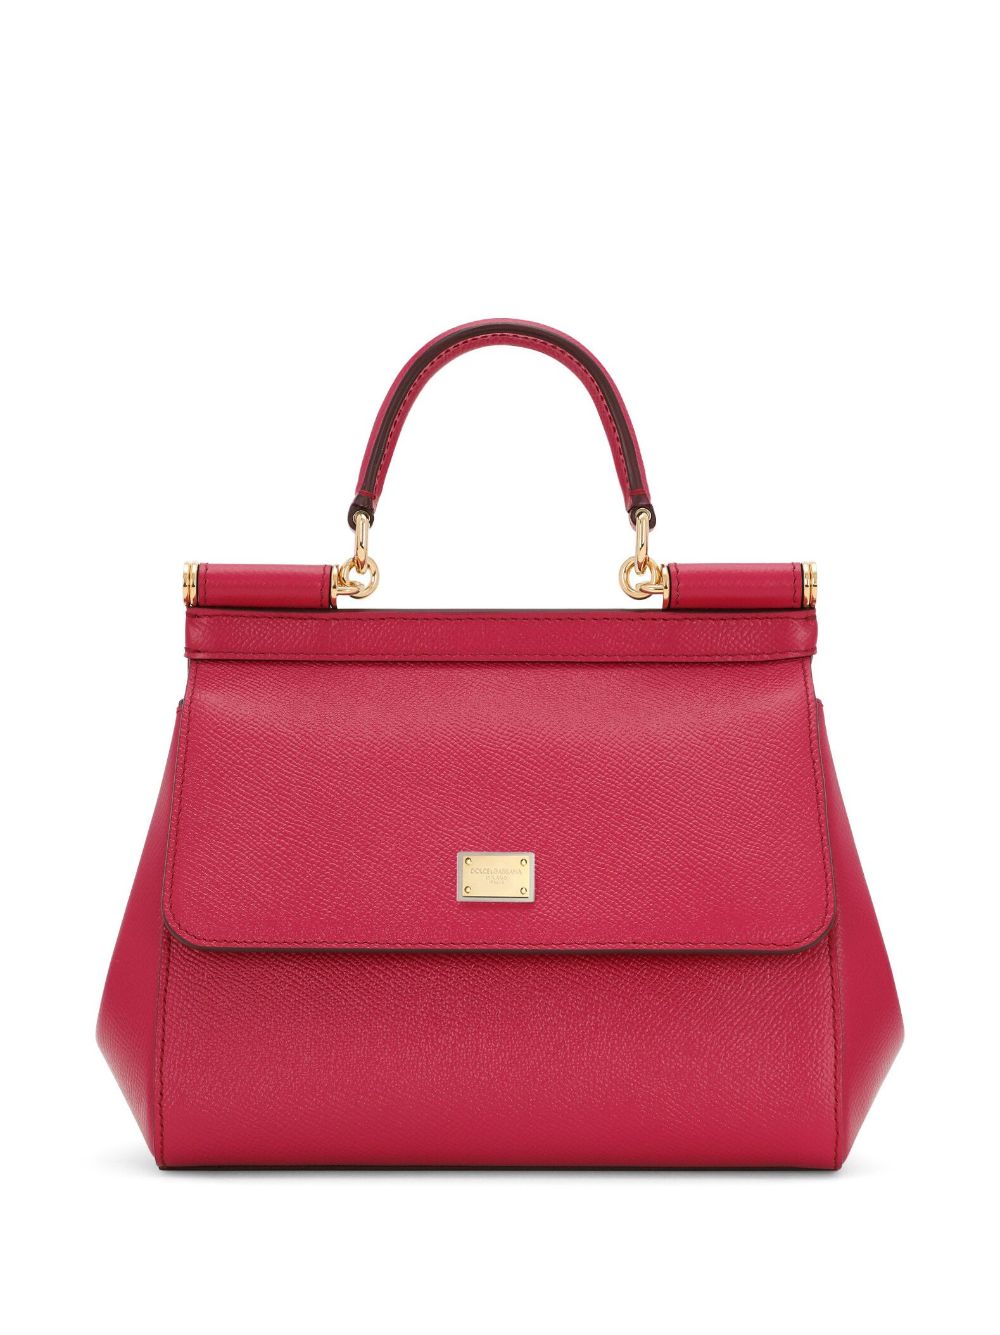 DOLCE & GABBANA Fuchsia Pink Leather Crossbody Handbag with Gold-Tone Logo, Magnetic Closure, and Detachable Strap - Medium